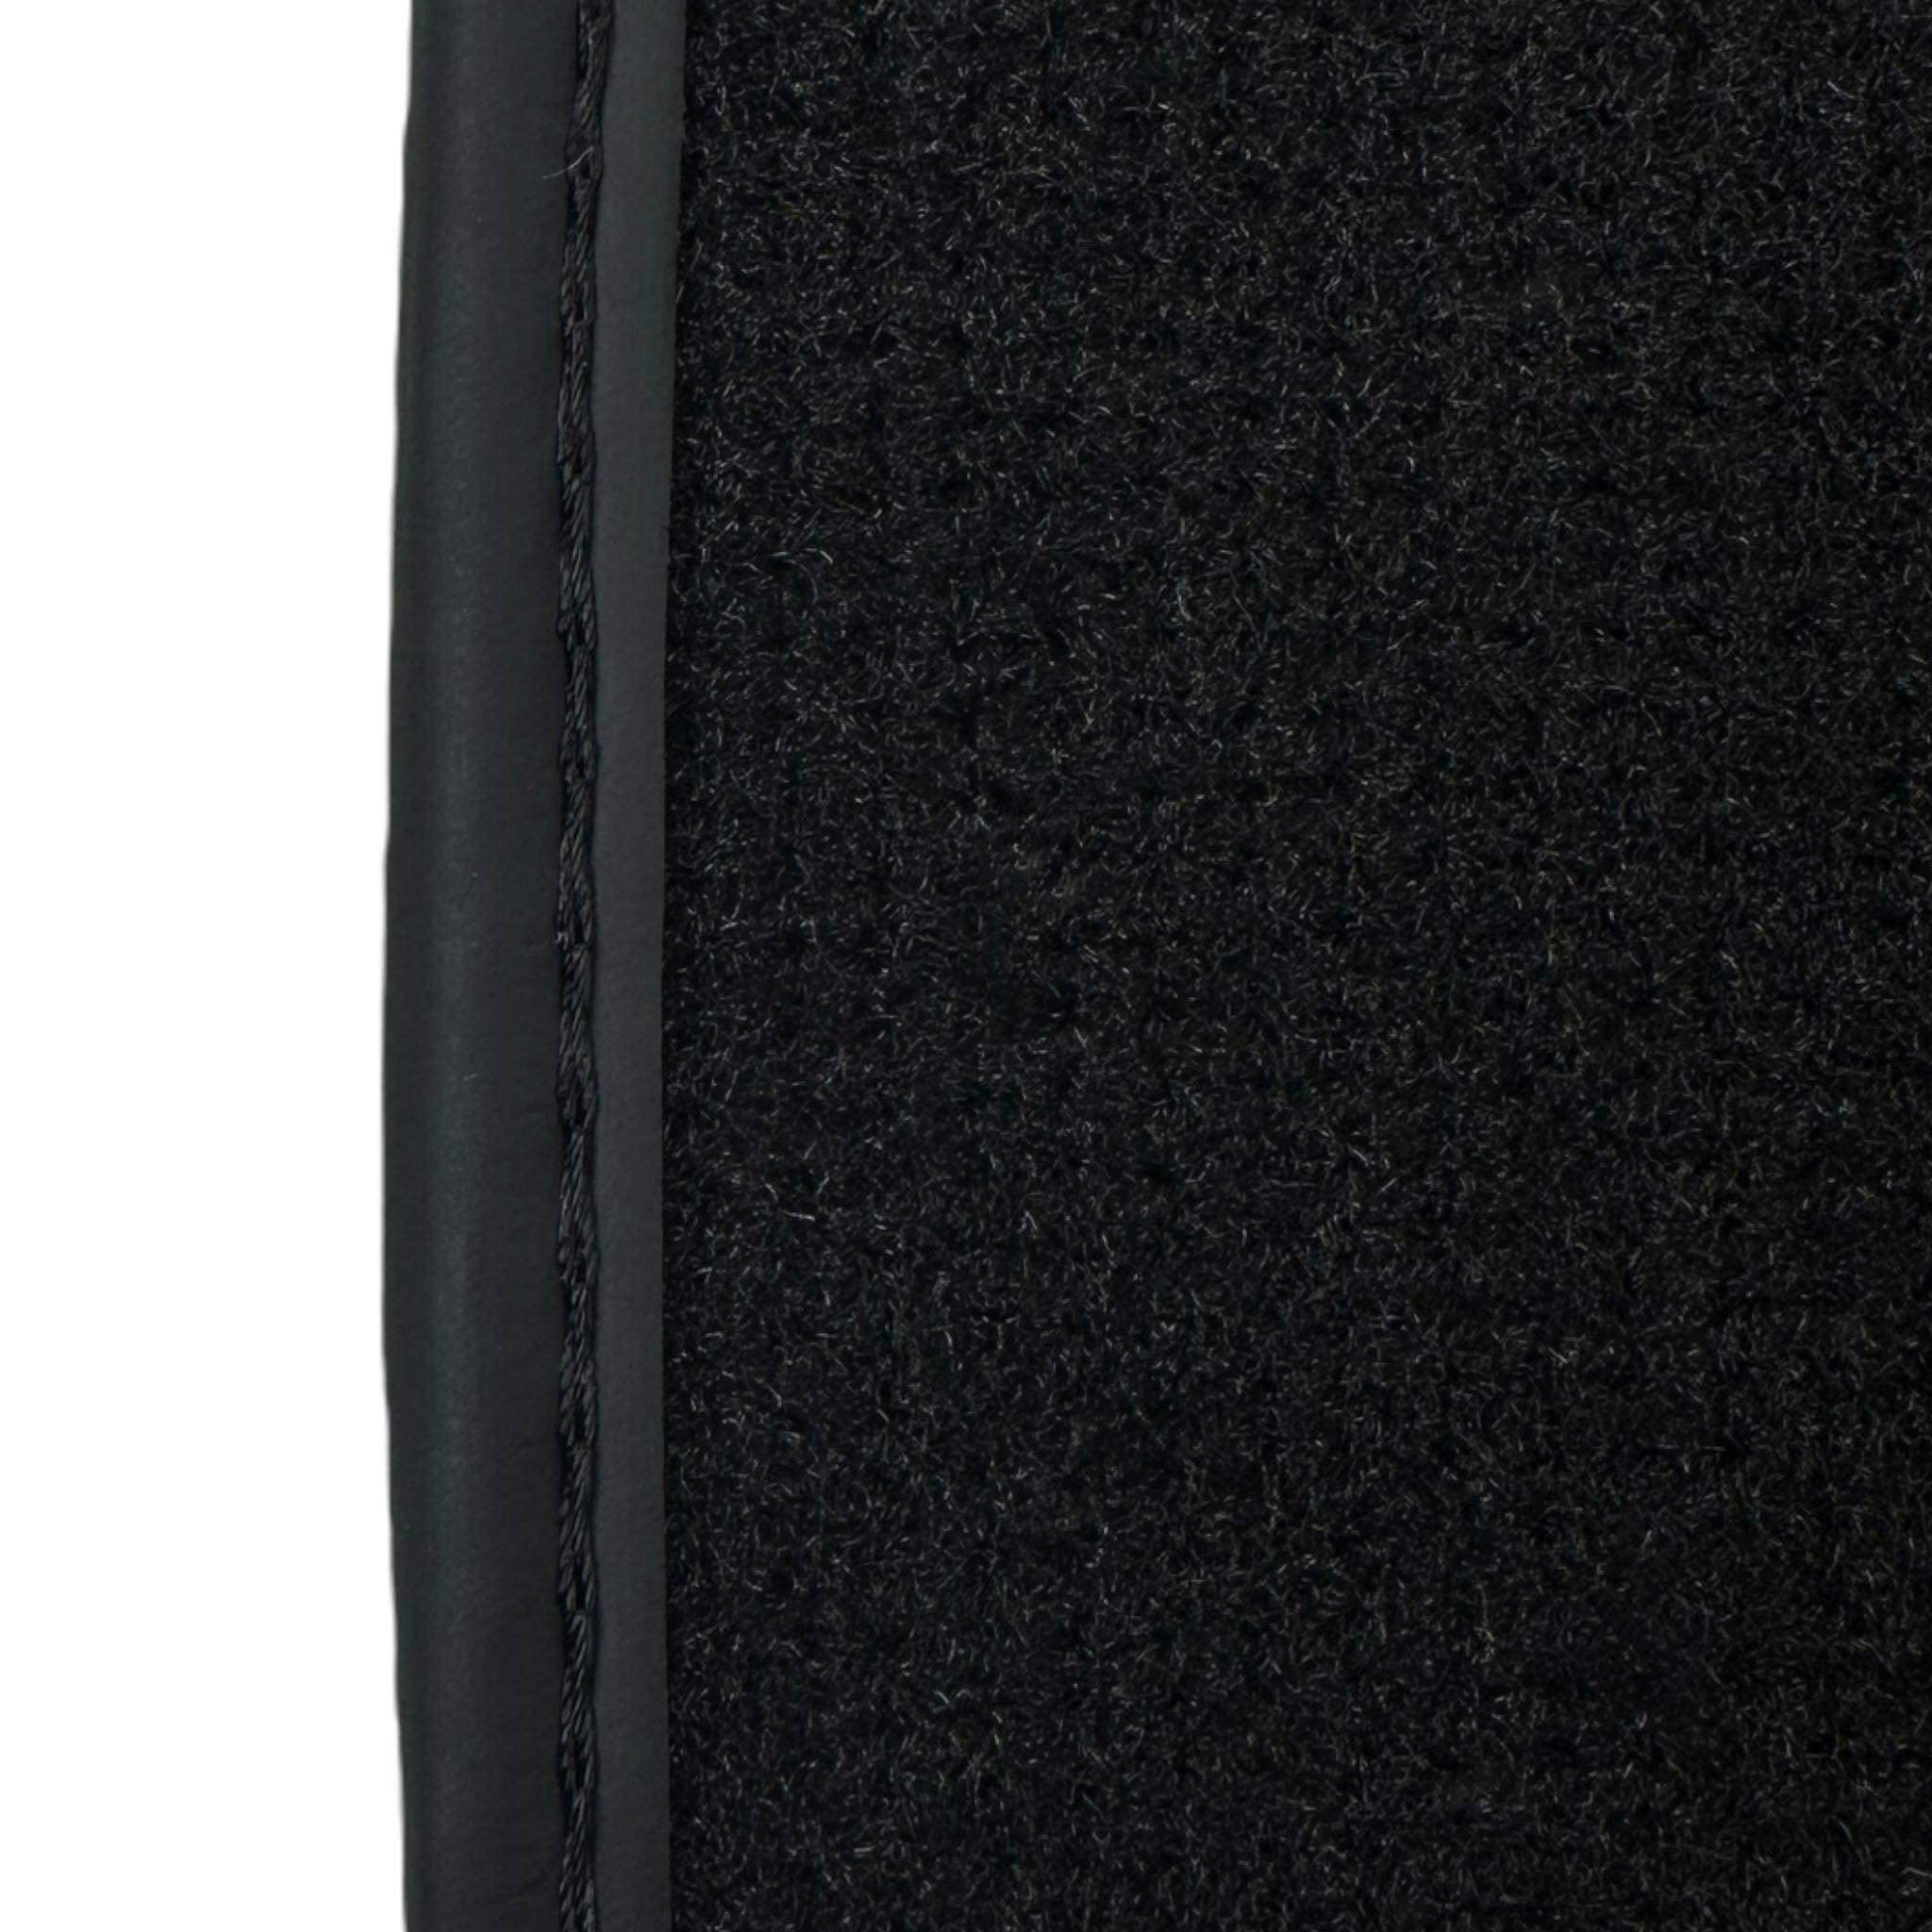 Black Floor Floor Mats For BMW X5 Series E53 | Black Trim